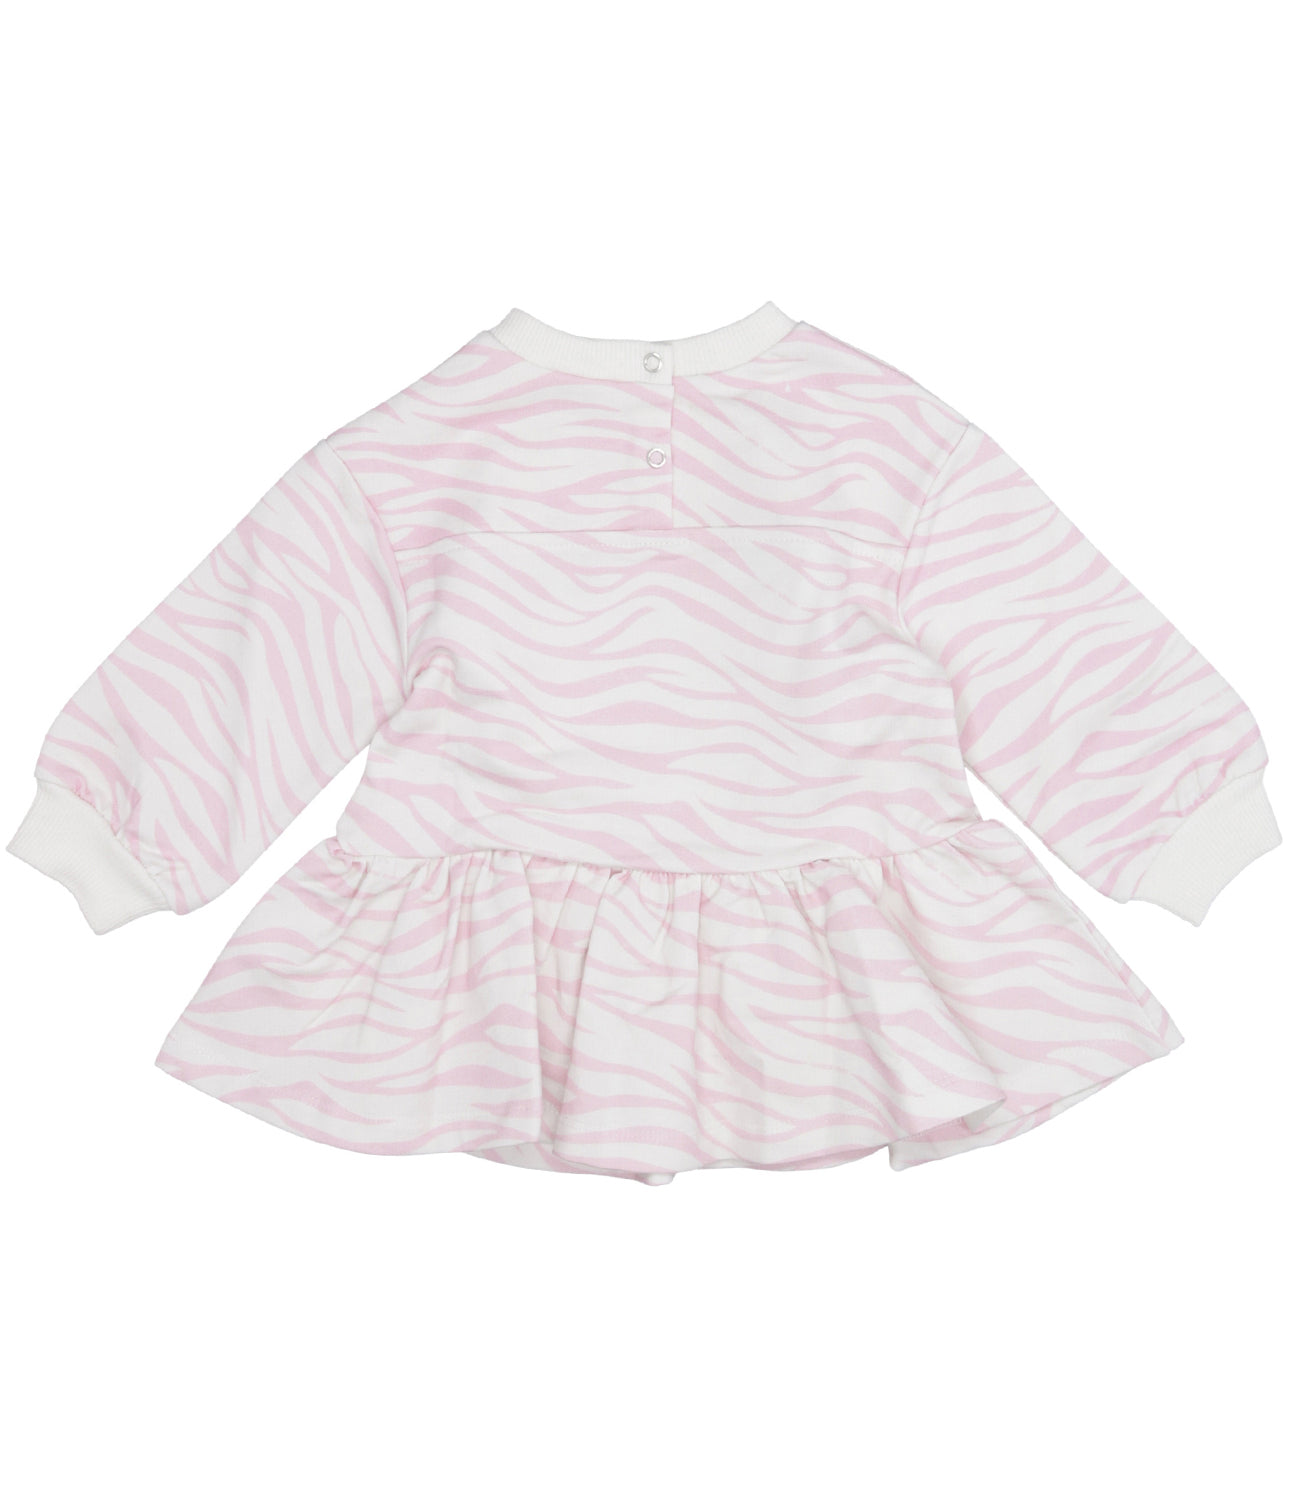 Chiara Ferragni Kids | Cream and Pink Dress